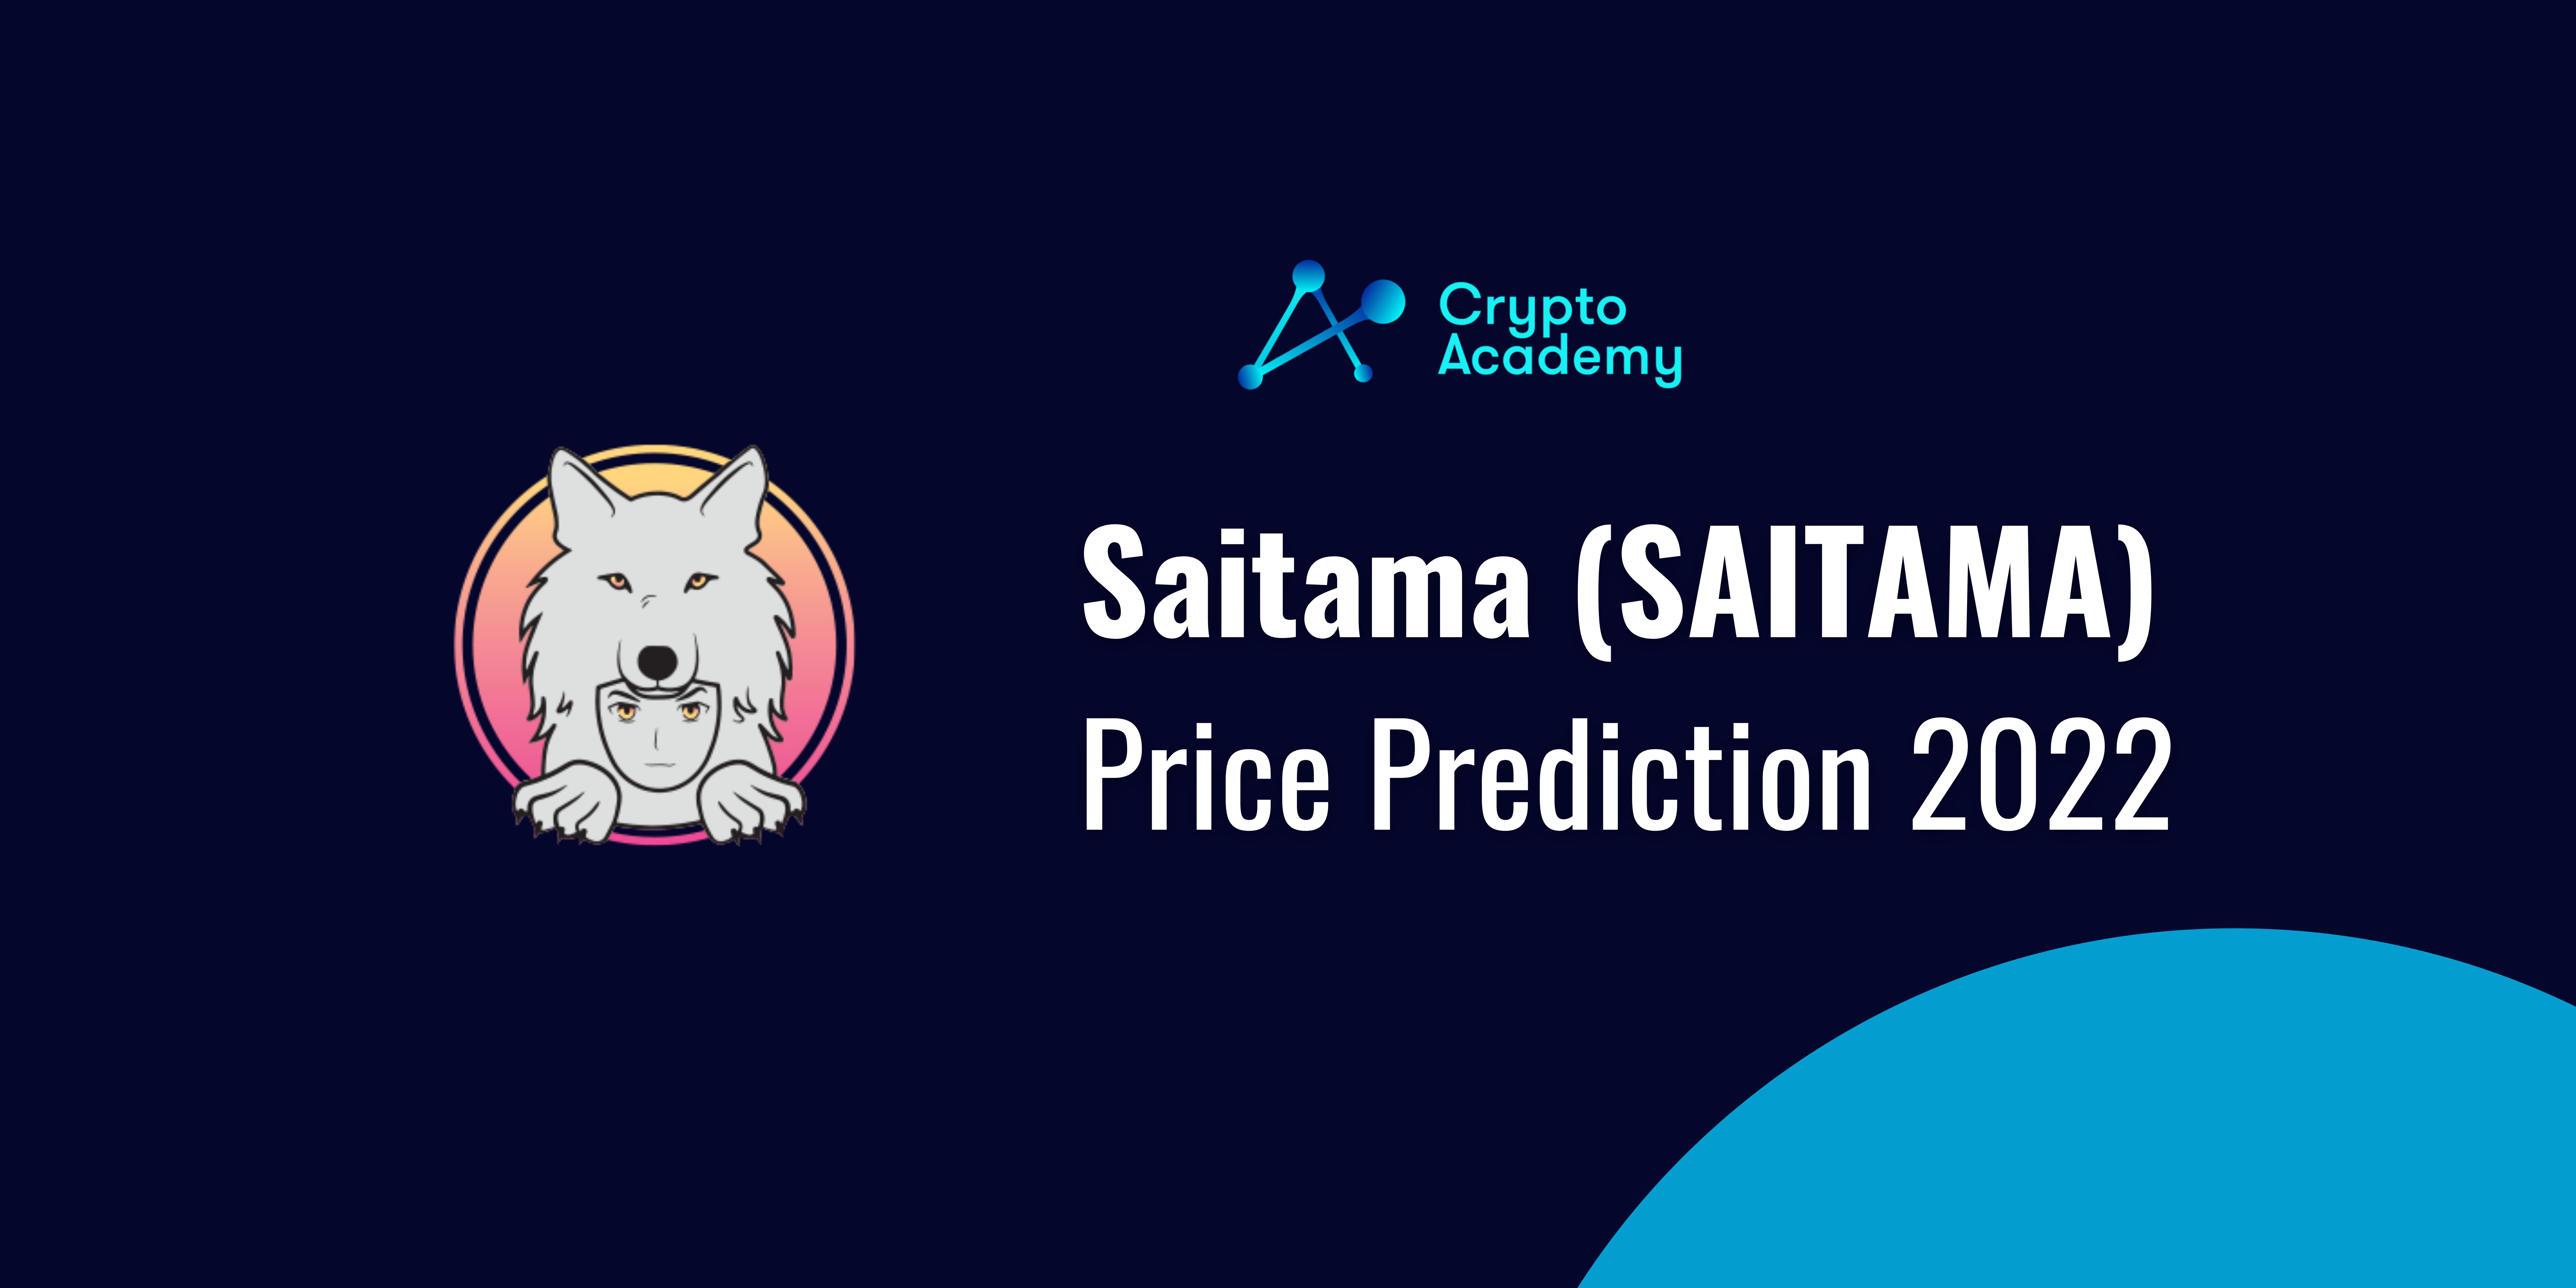 Saitama Token Price Prediction 2022 and Beyond - Will SAITAMA Eventually Reach $1?